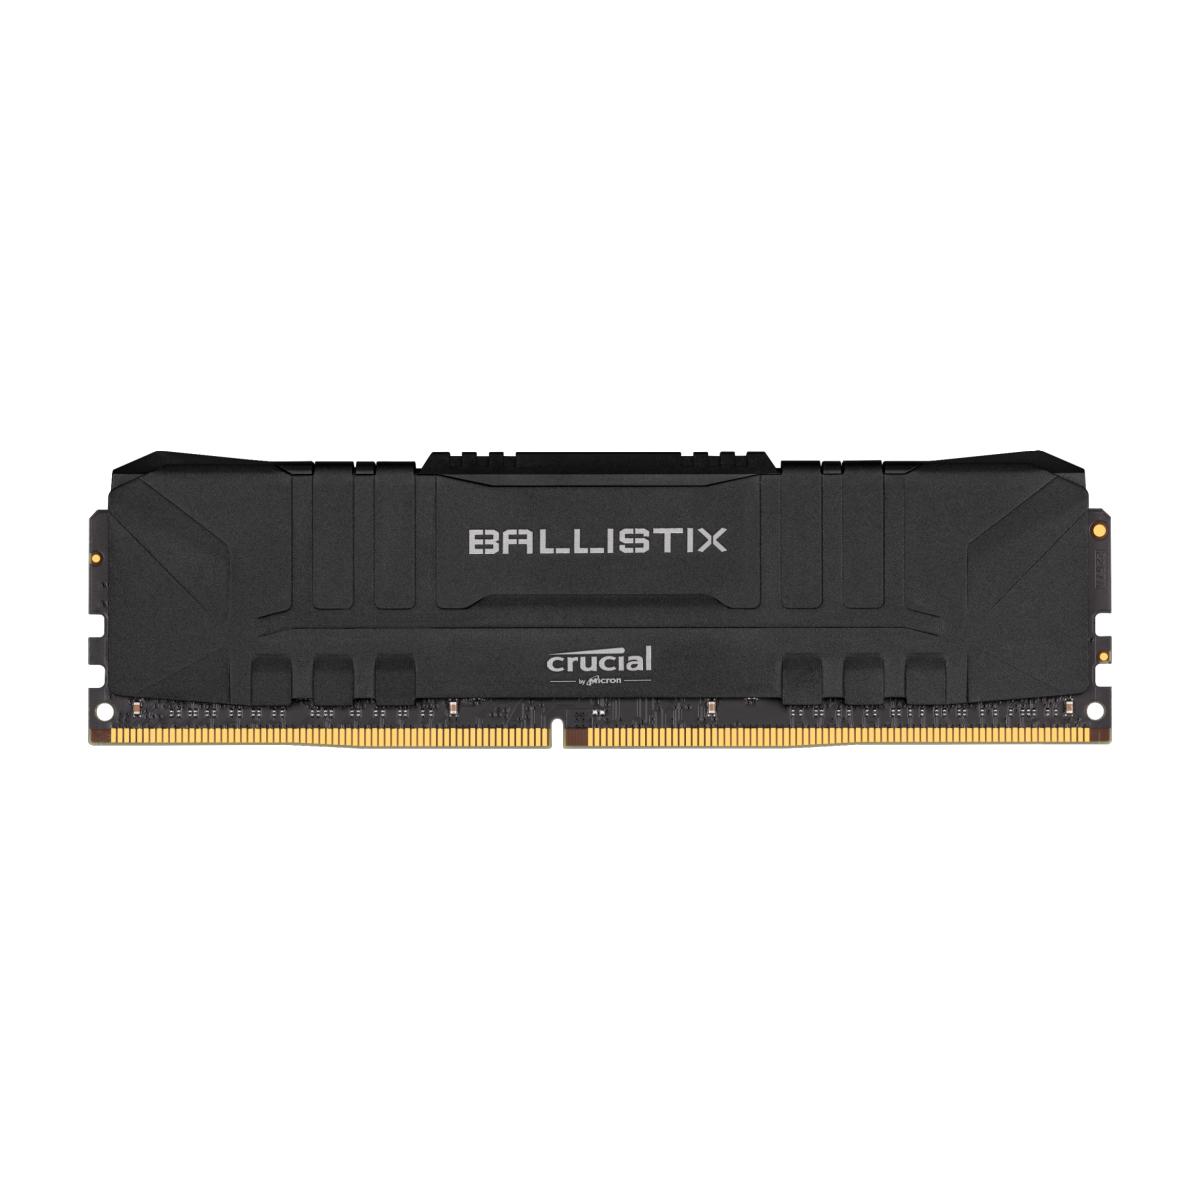 MEMORIA CRUCIAL BELLISTIX 8GB DDR4 3200 MHZ NEGRO BL8G32C16U4B UPC 0649528824110 - BL8G32C16U4B